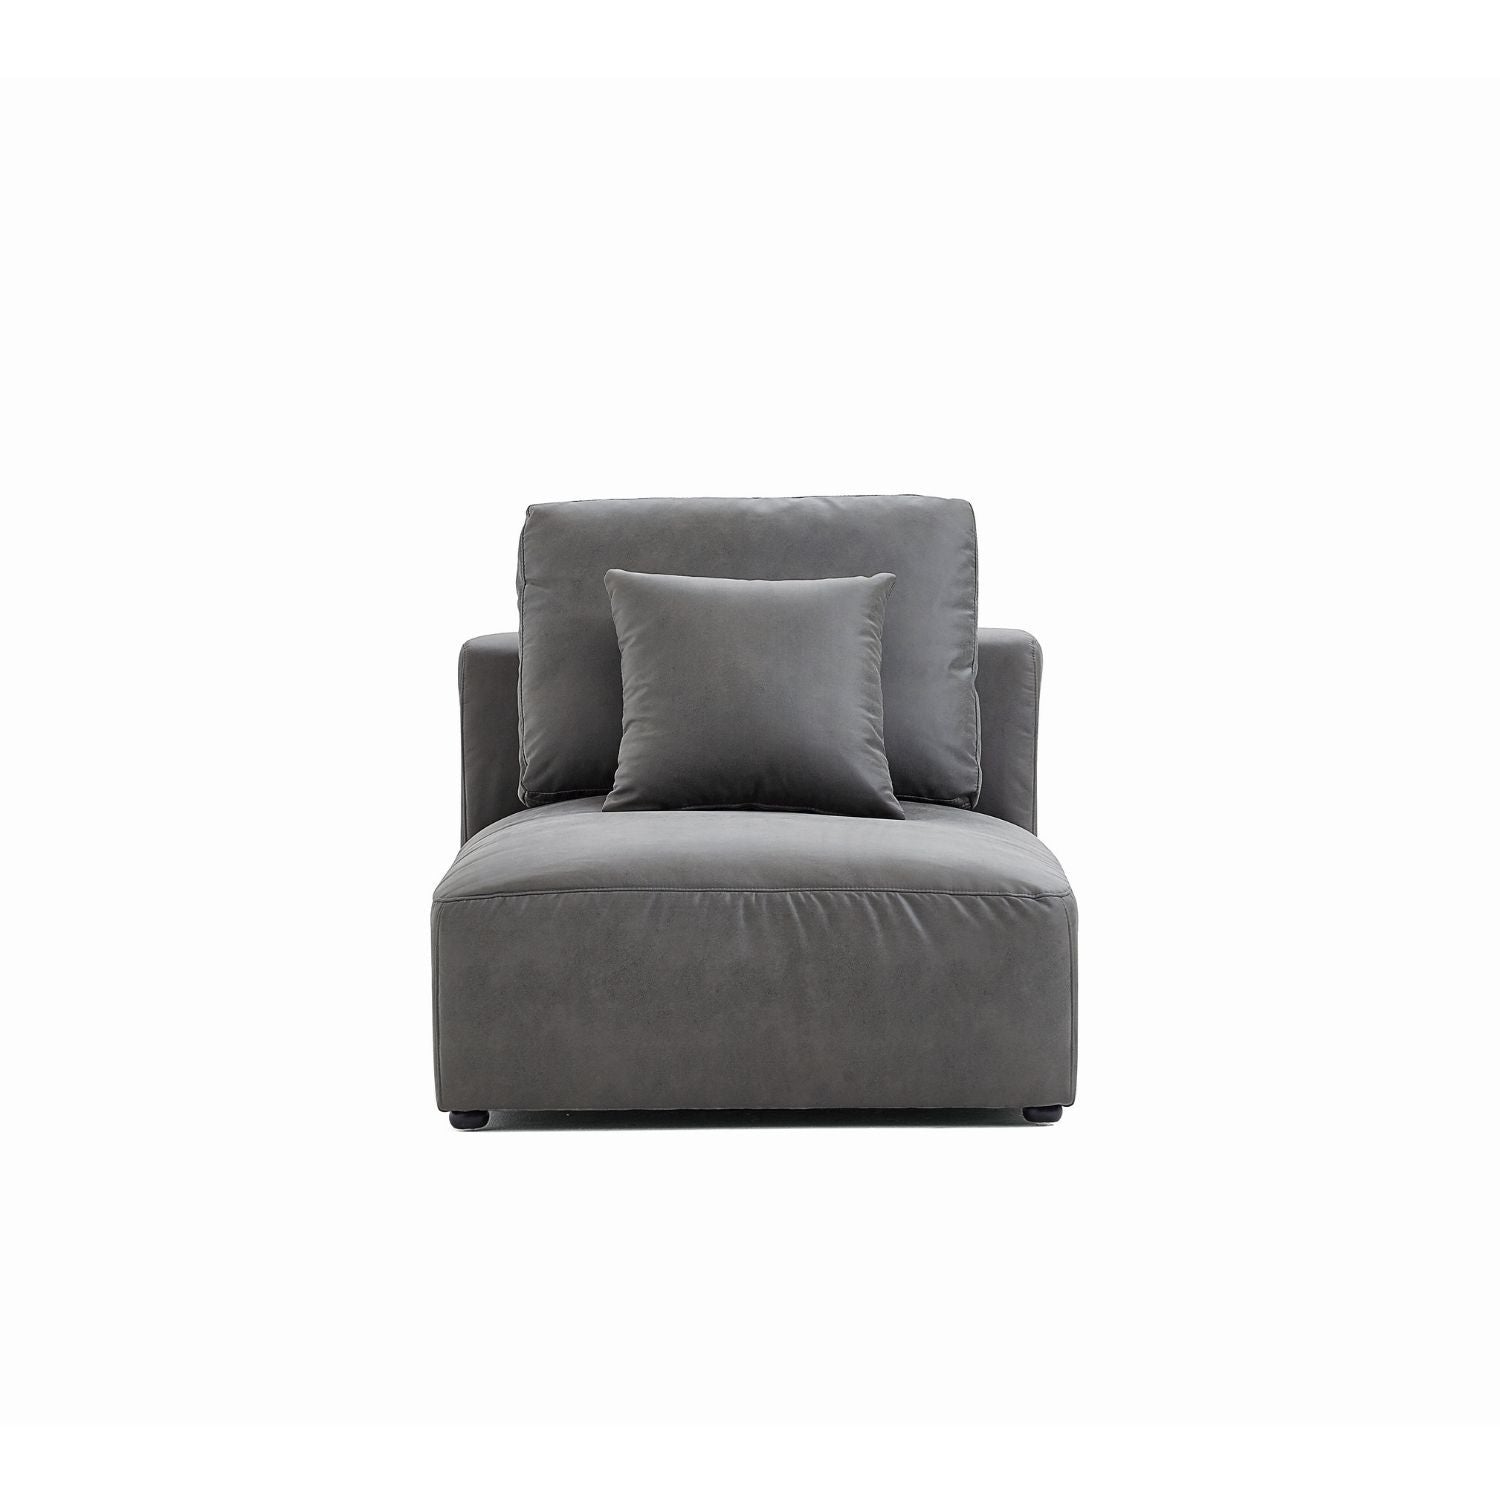 The 5th - Armless Seat Sofa Foundry Dark Grey 